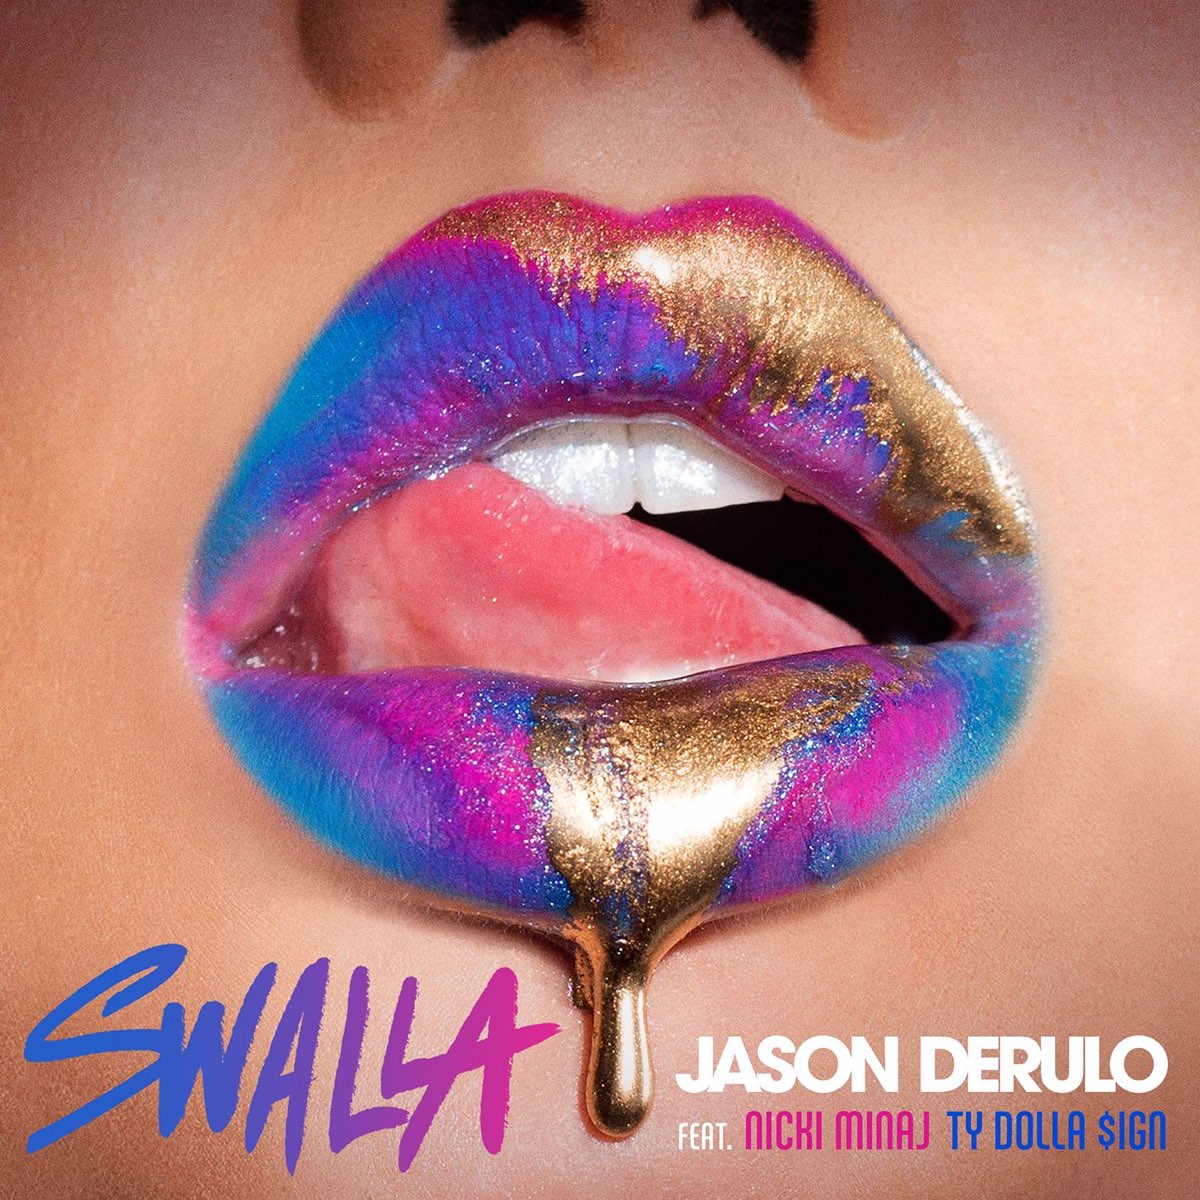 Picasso Udholde prosa Swalla (feat. Nicki Minaj & Ty Dolla $ign) - Single by Jason Derulo on  Apple Music